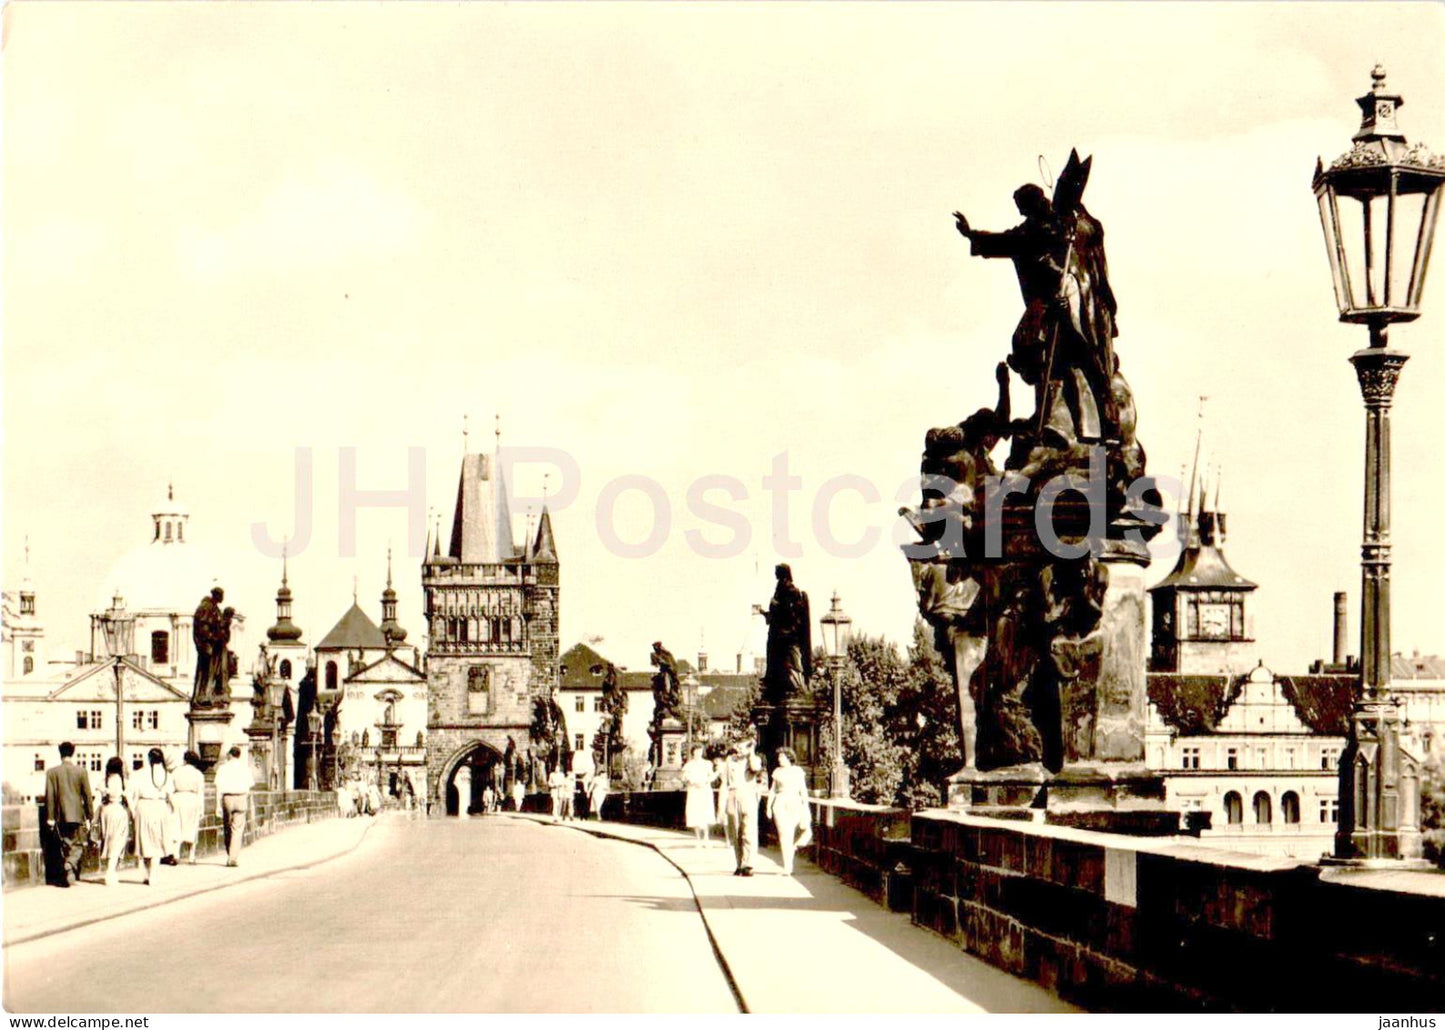 Praha - Prague - Karluv Most - Charles Bridge - 2132 - Czech Republic - Czechoslovakia - unused - JH Postcards